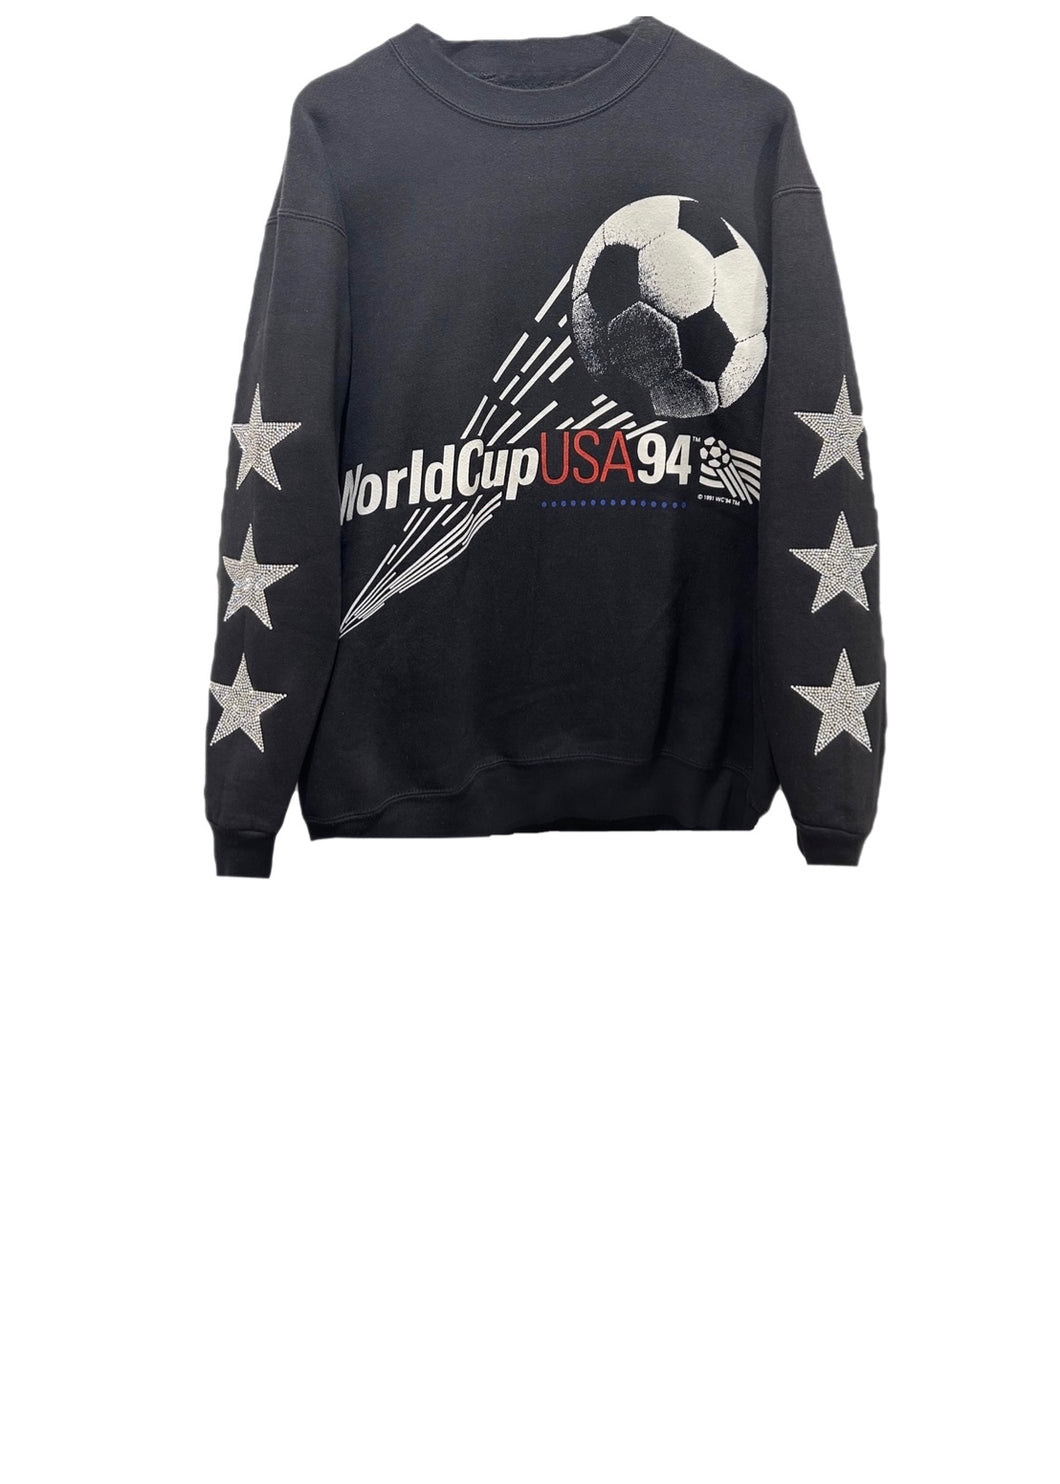 Soccer Futbol World Cup , MLS One of a KIND Vintage USA Team, 1994 Sweatshirt with Three Crystal Star Design